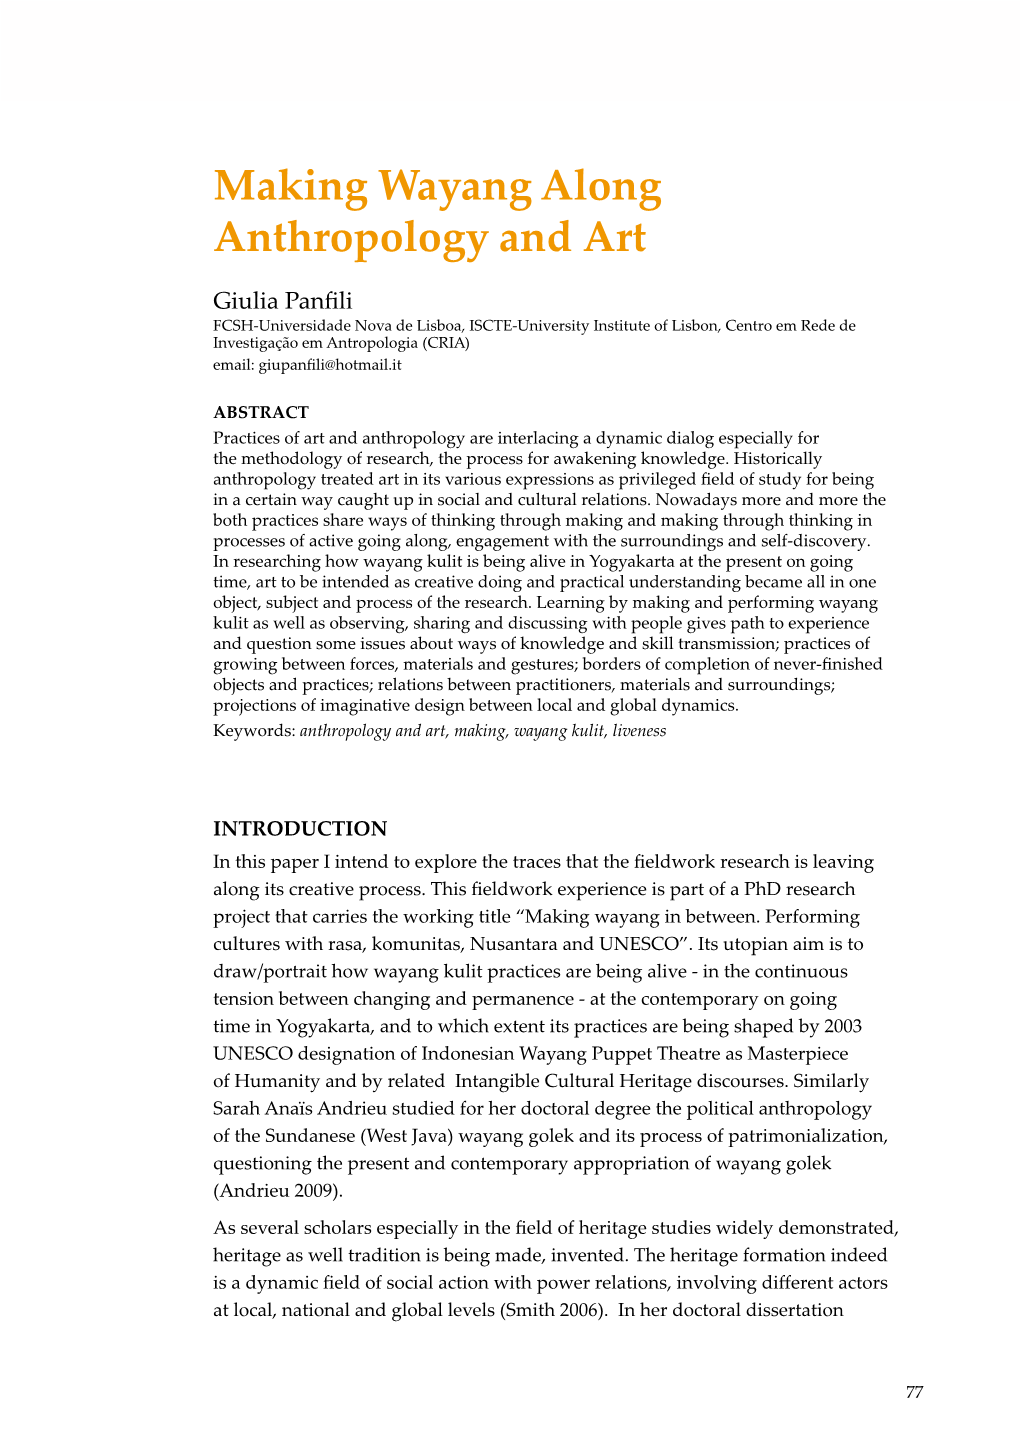 Making Wayang Along Anthropology and Art